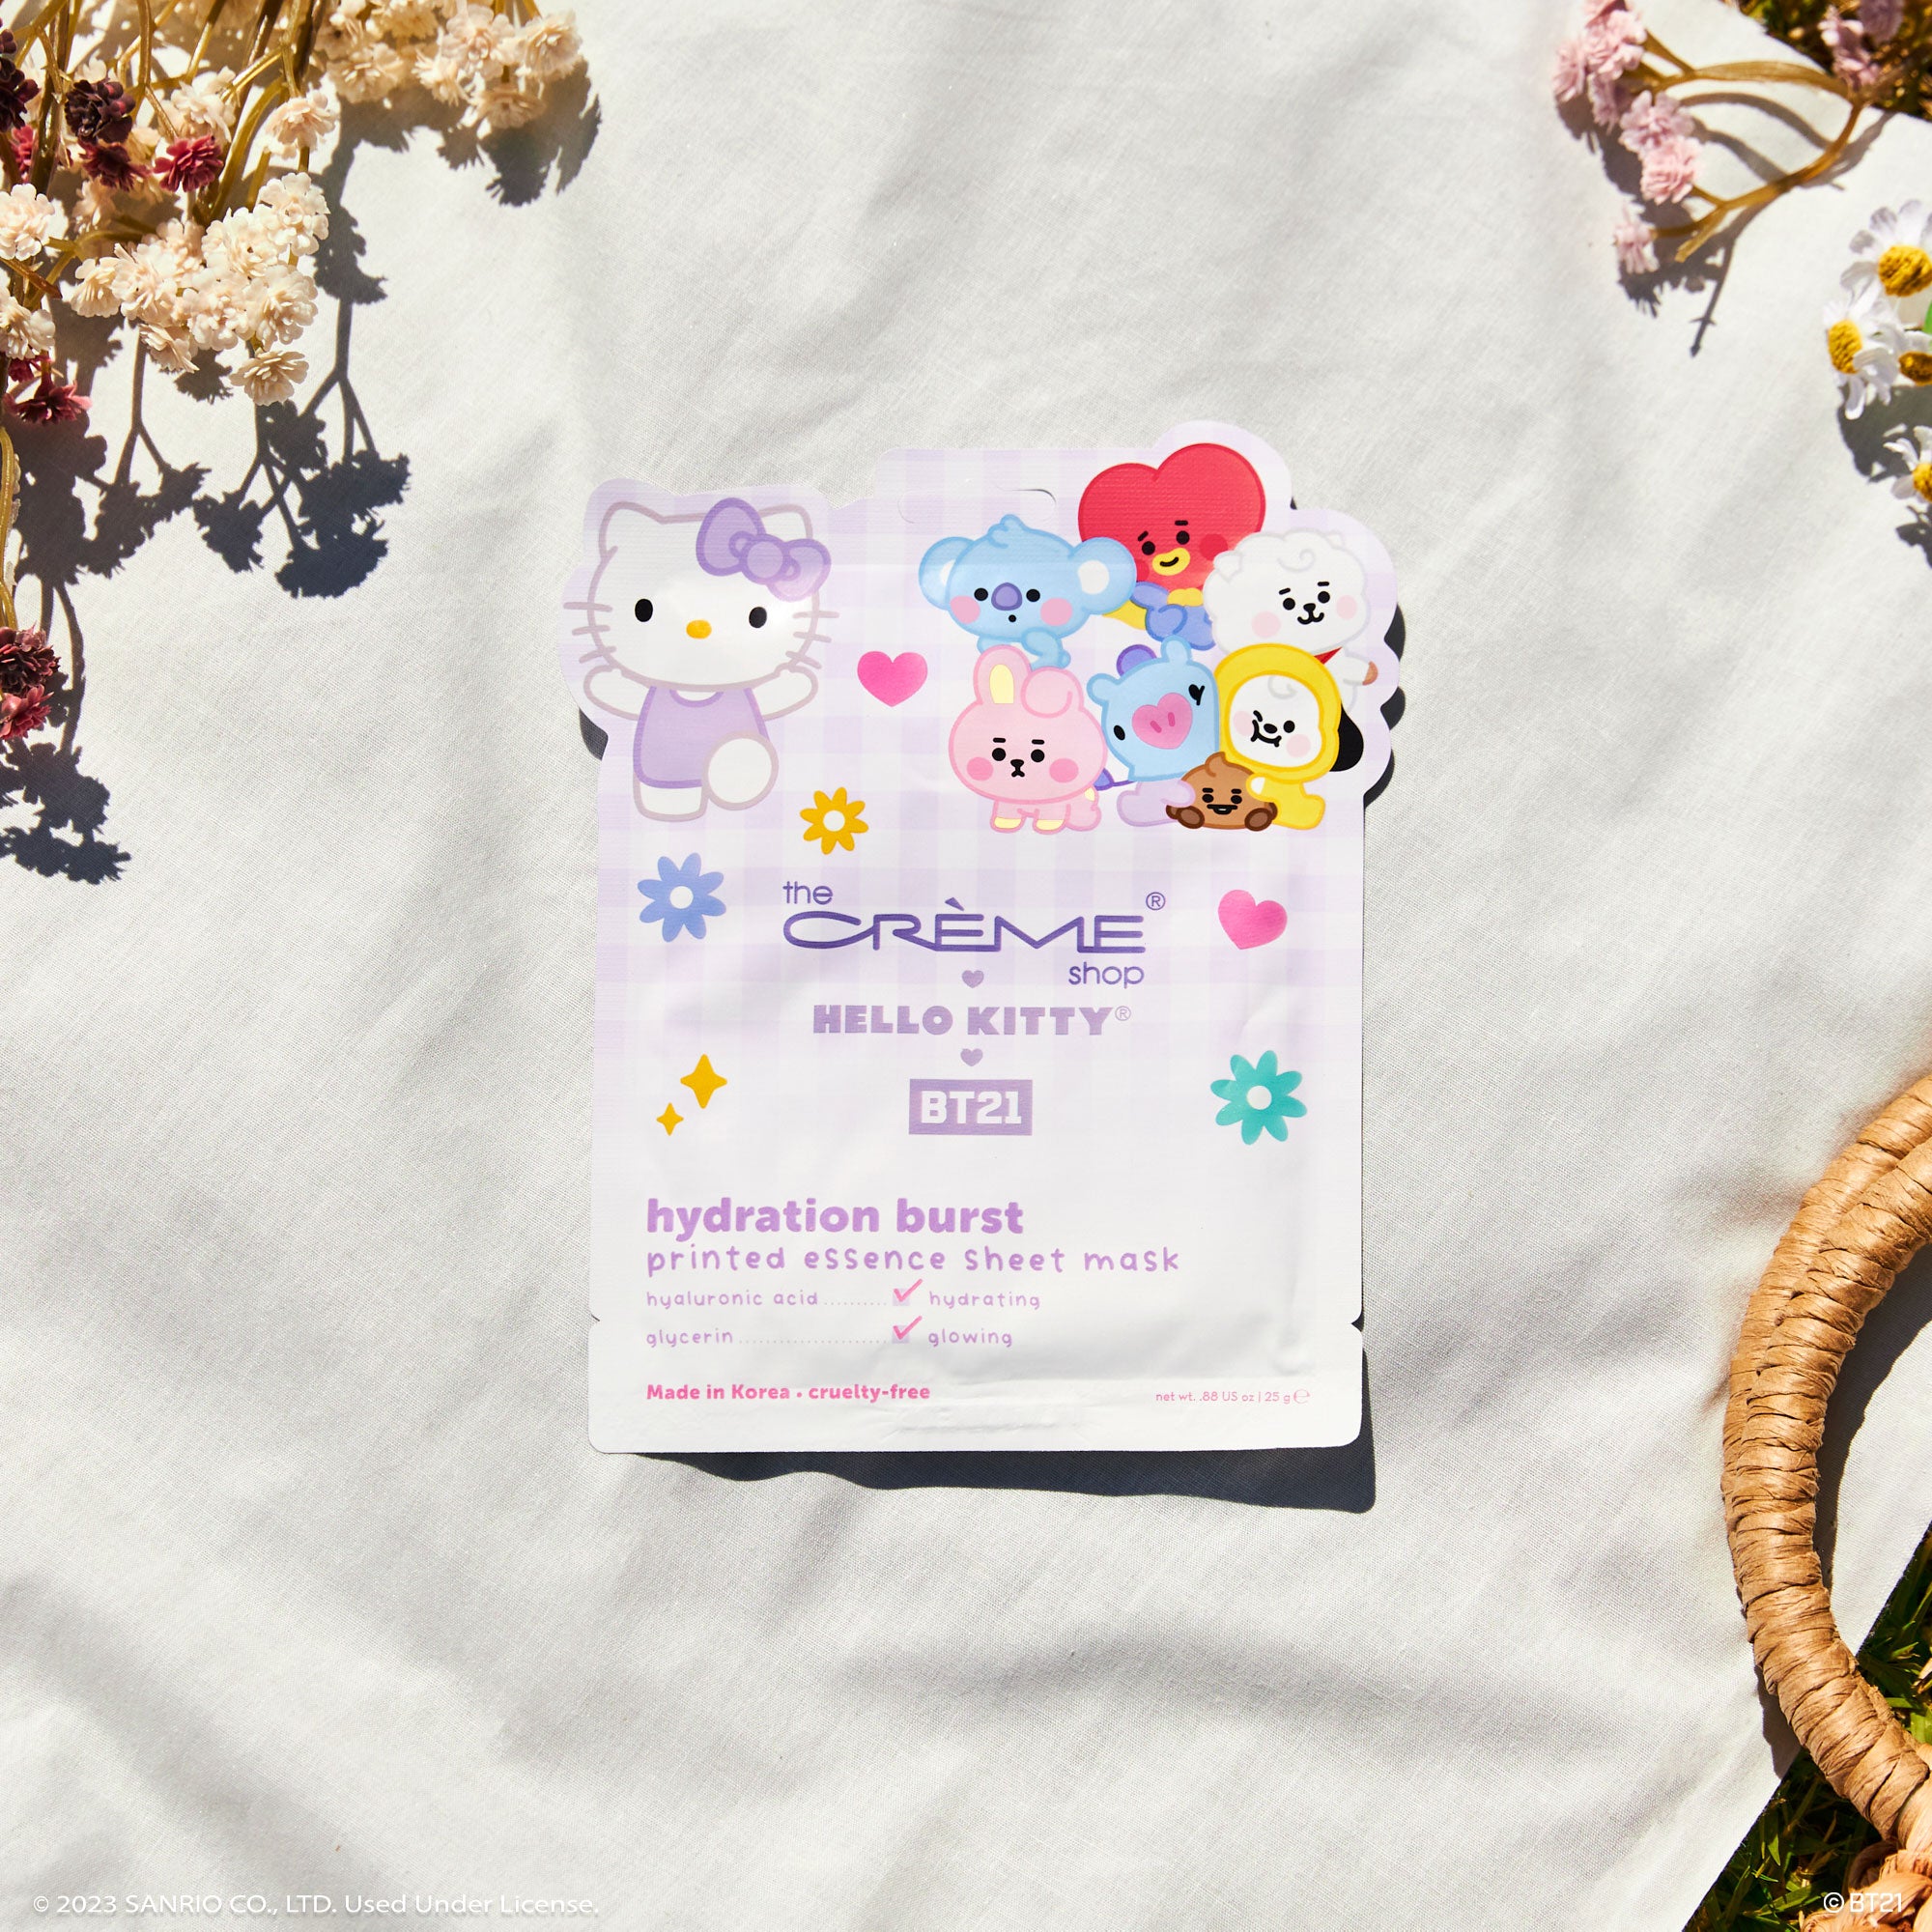 Hello Kitty & BT21 Hydration Burst Printed Essence Sheet Mask Beauty The Crème Shop   